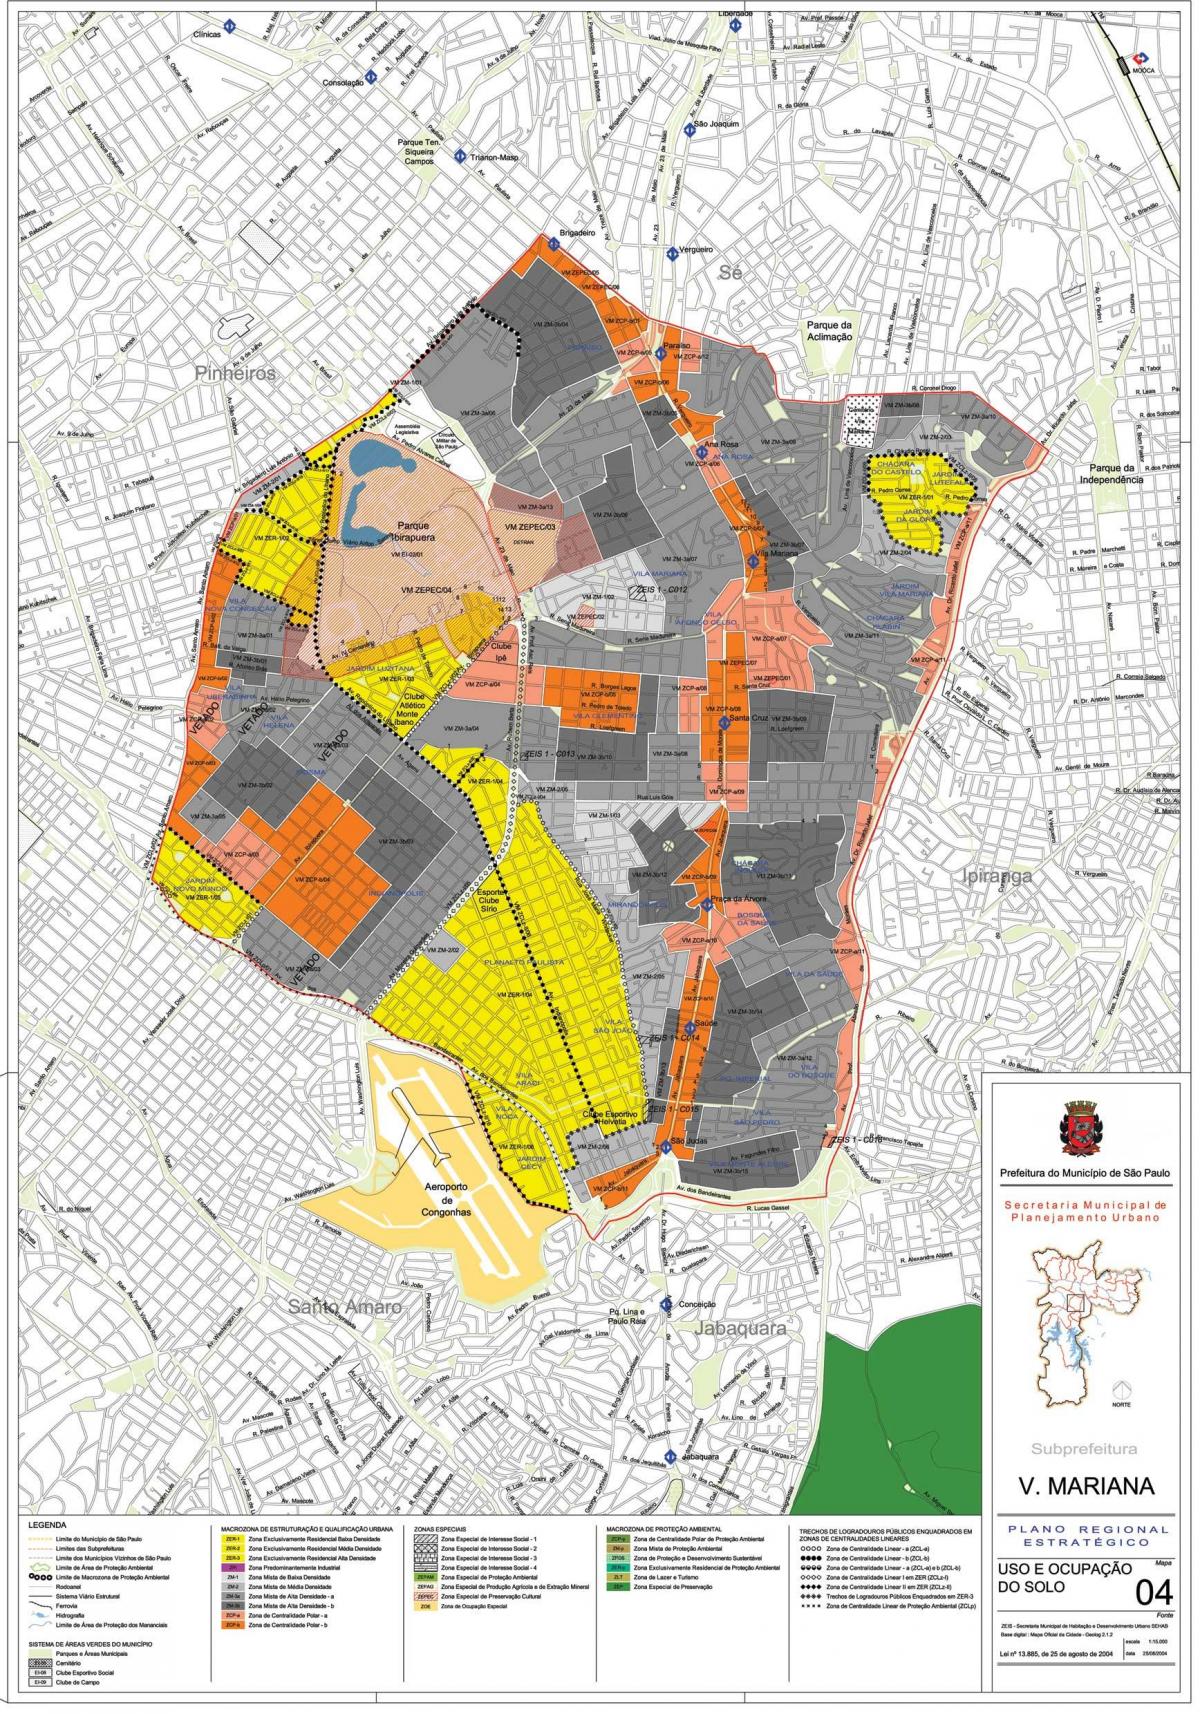 Map of Vila Mariana São Paulo - Occupation of the soil